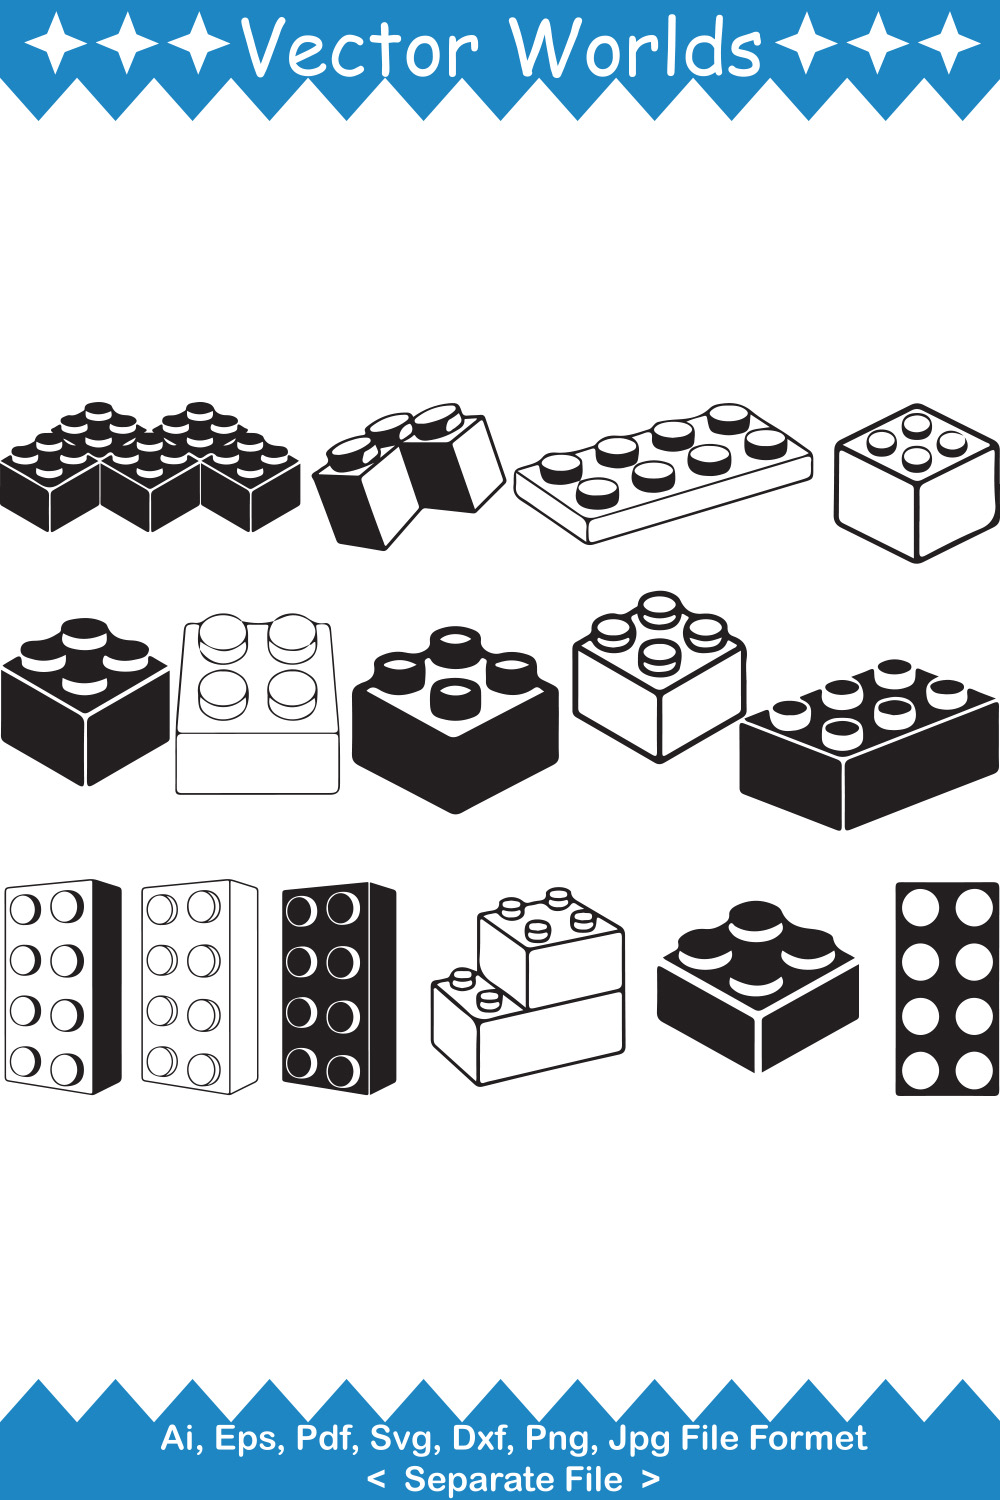 Lego bricks SVG Vector Design pinterest preview image.